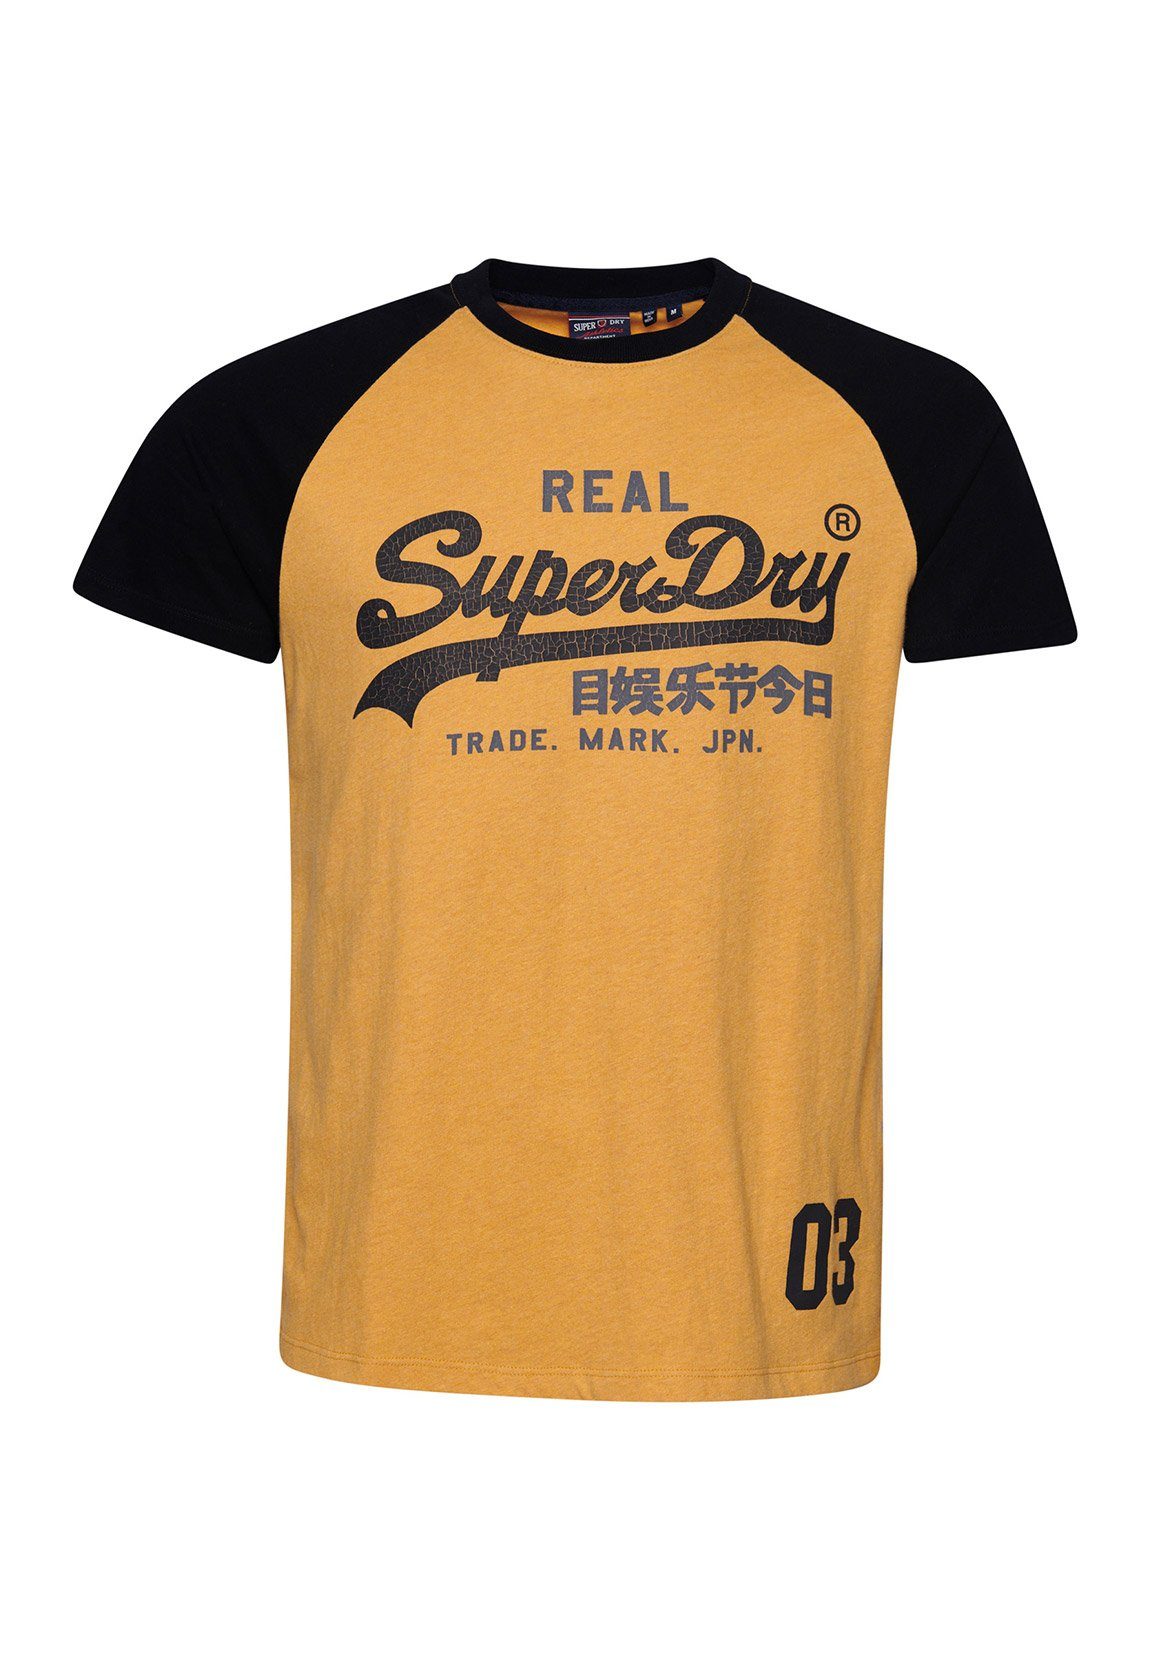 HERITAGE TEE Superdry RGLN Herren VL Ochre Yellow VINTAGE Superdry T-Shirt T-Shirt